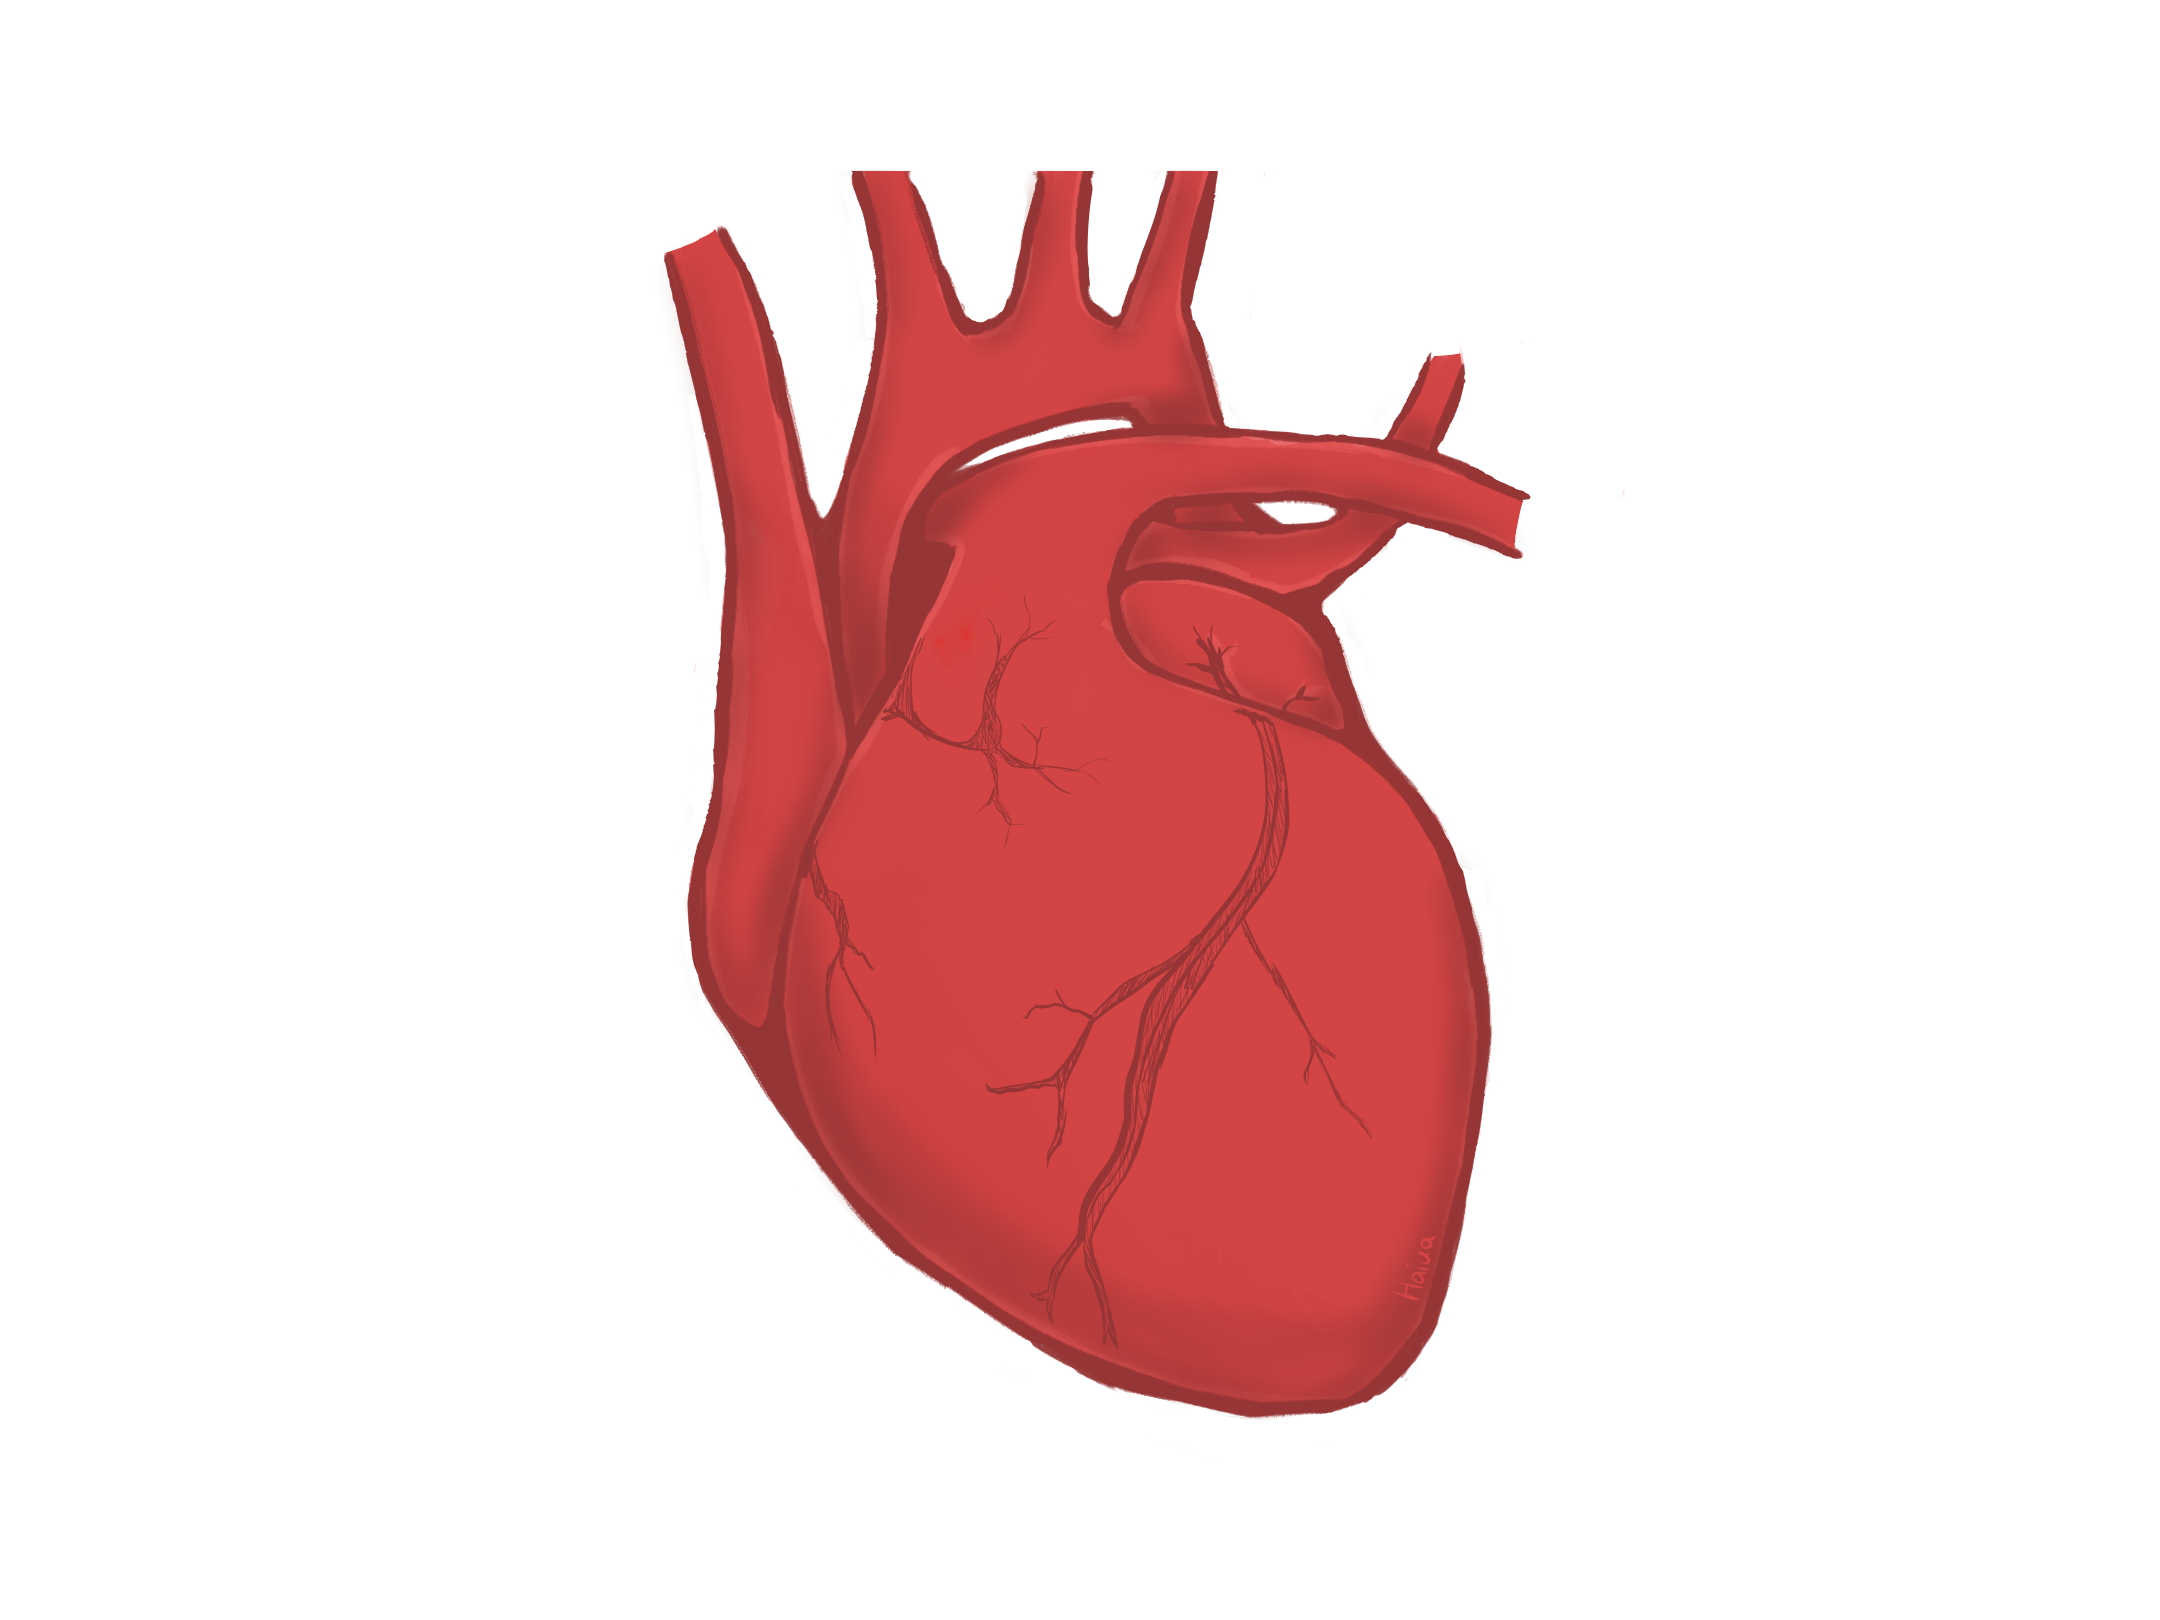 Heart background design